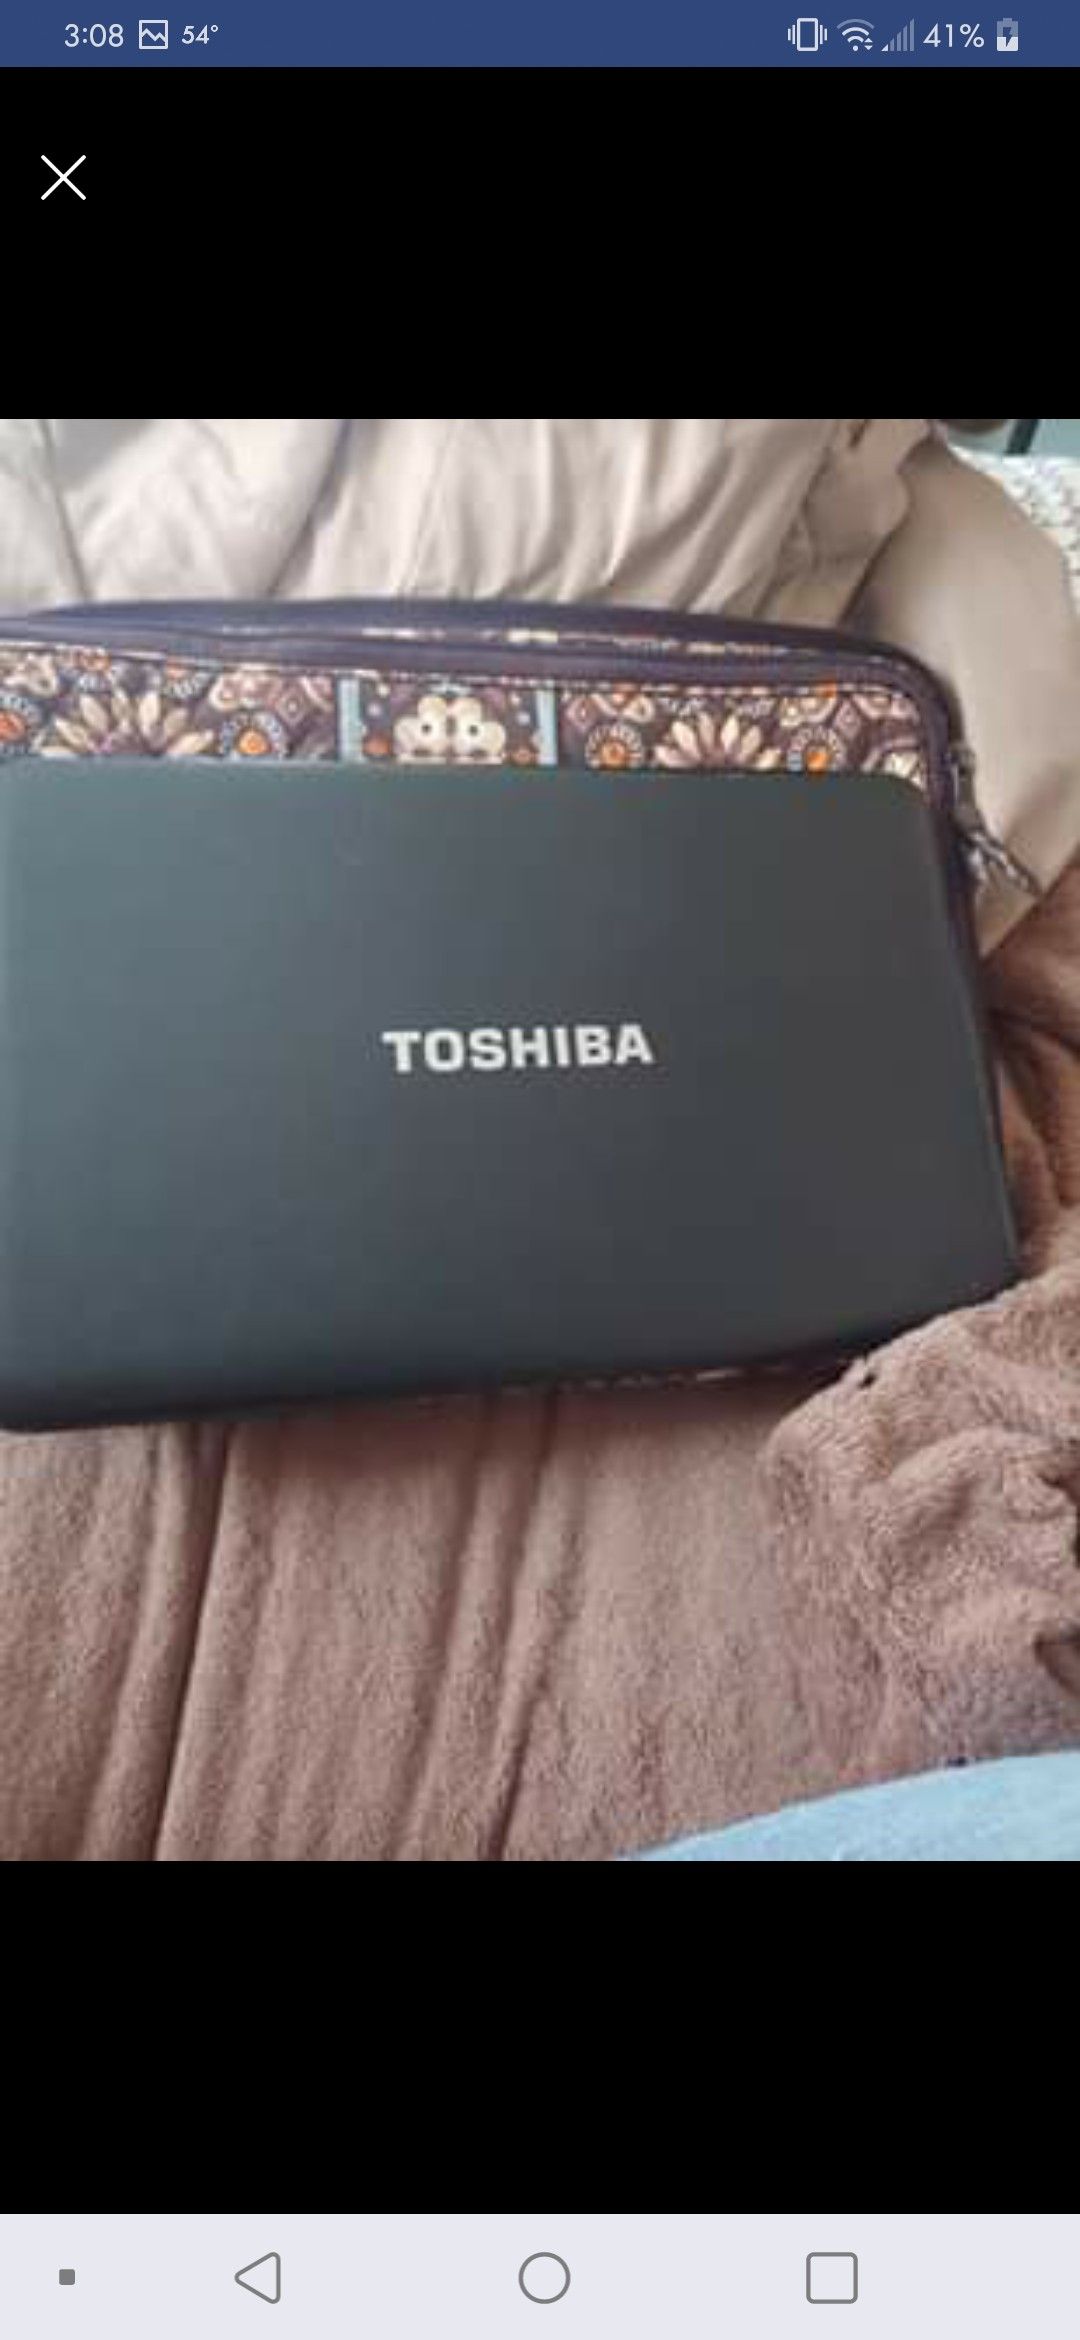 2013 toshiba laptop